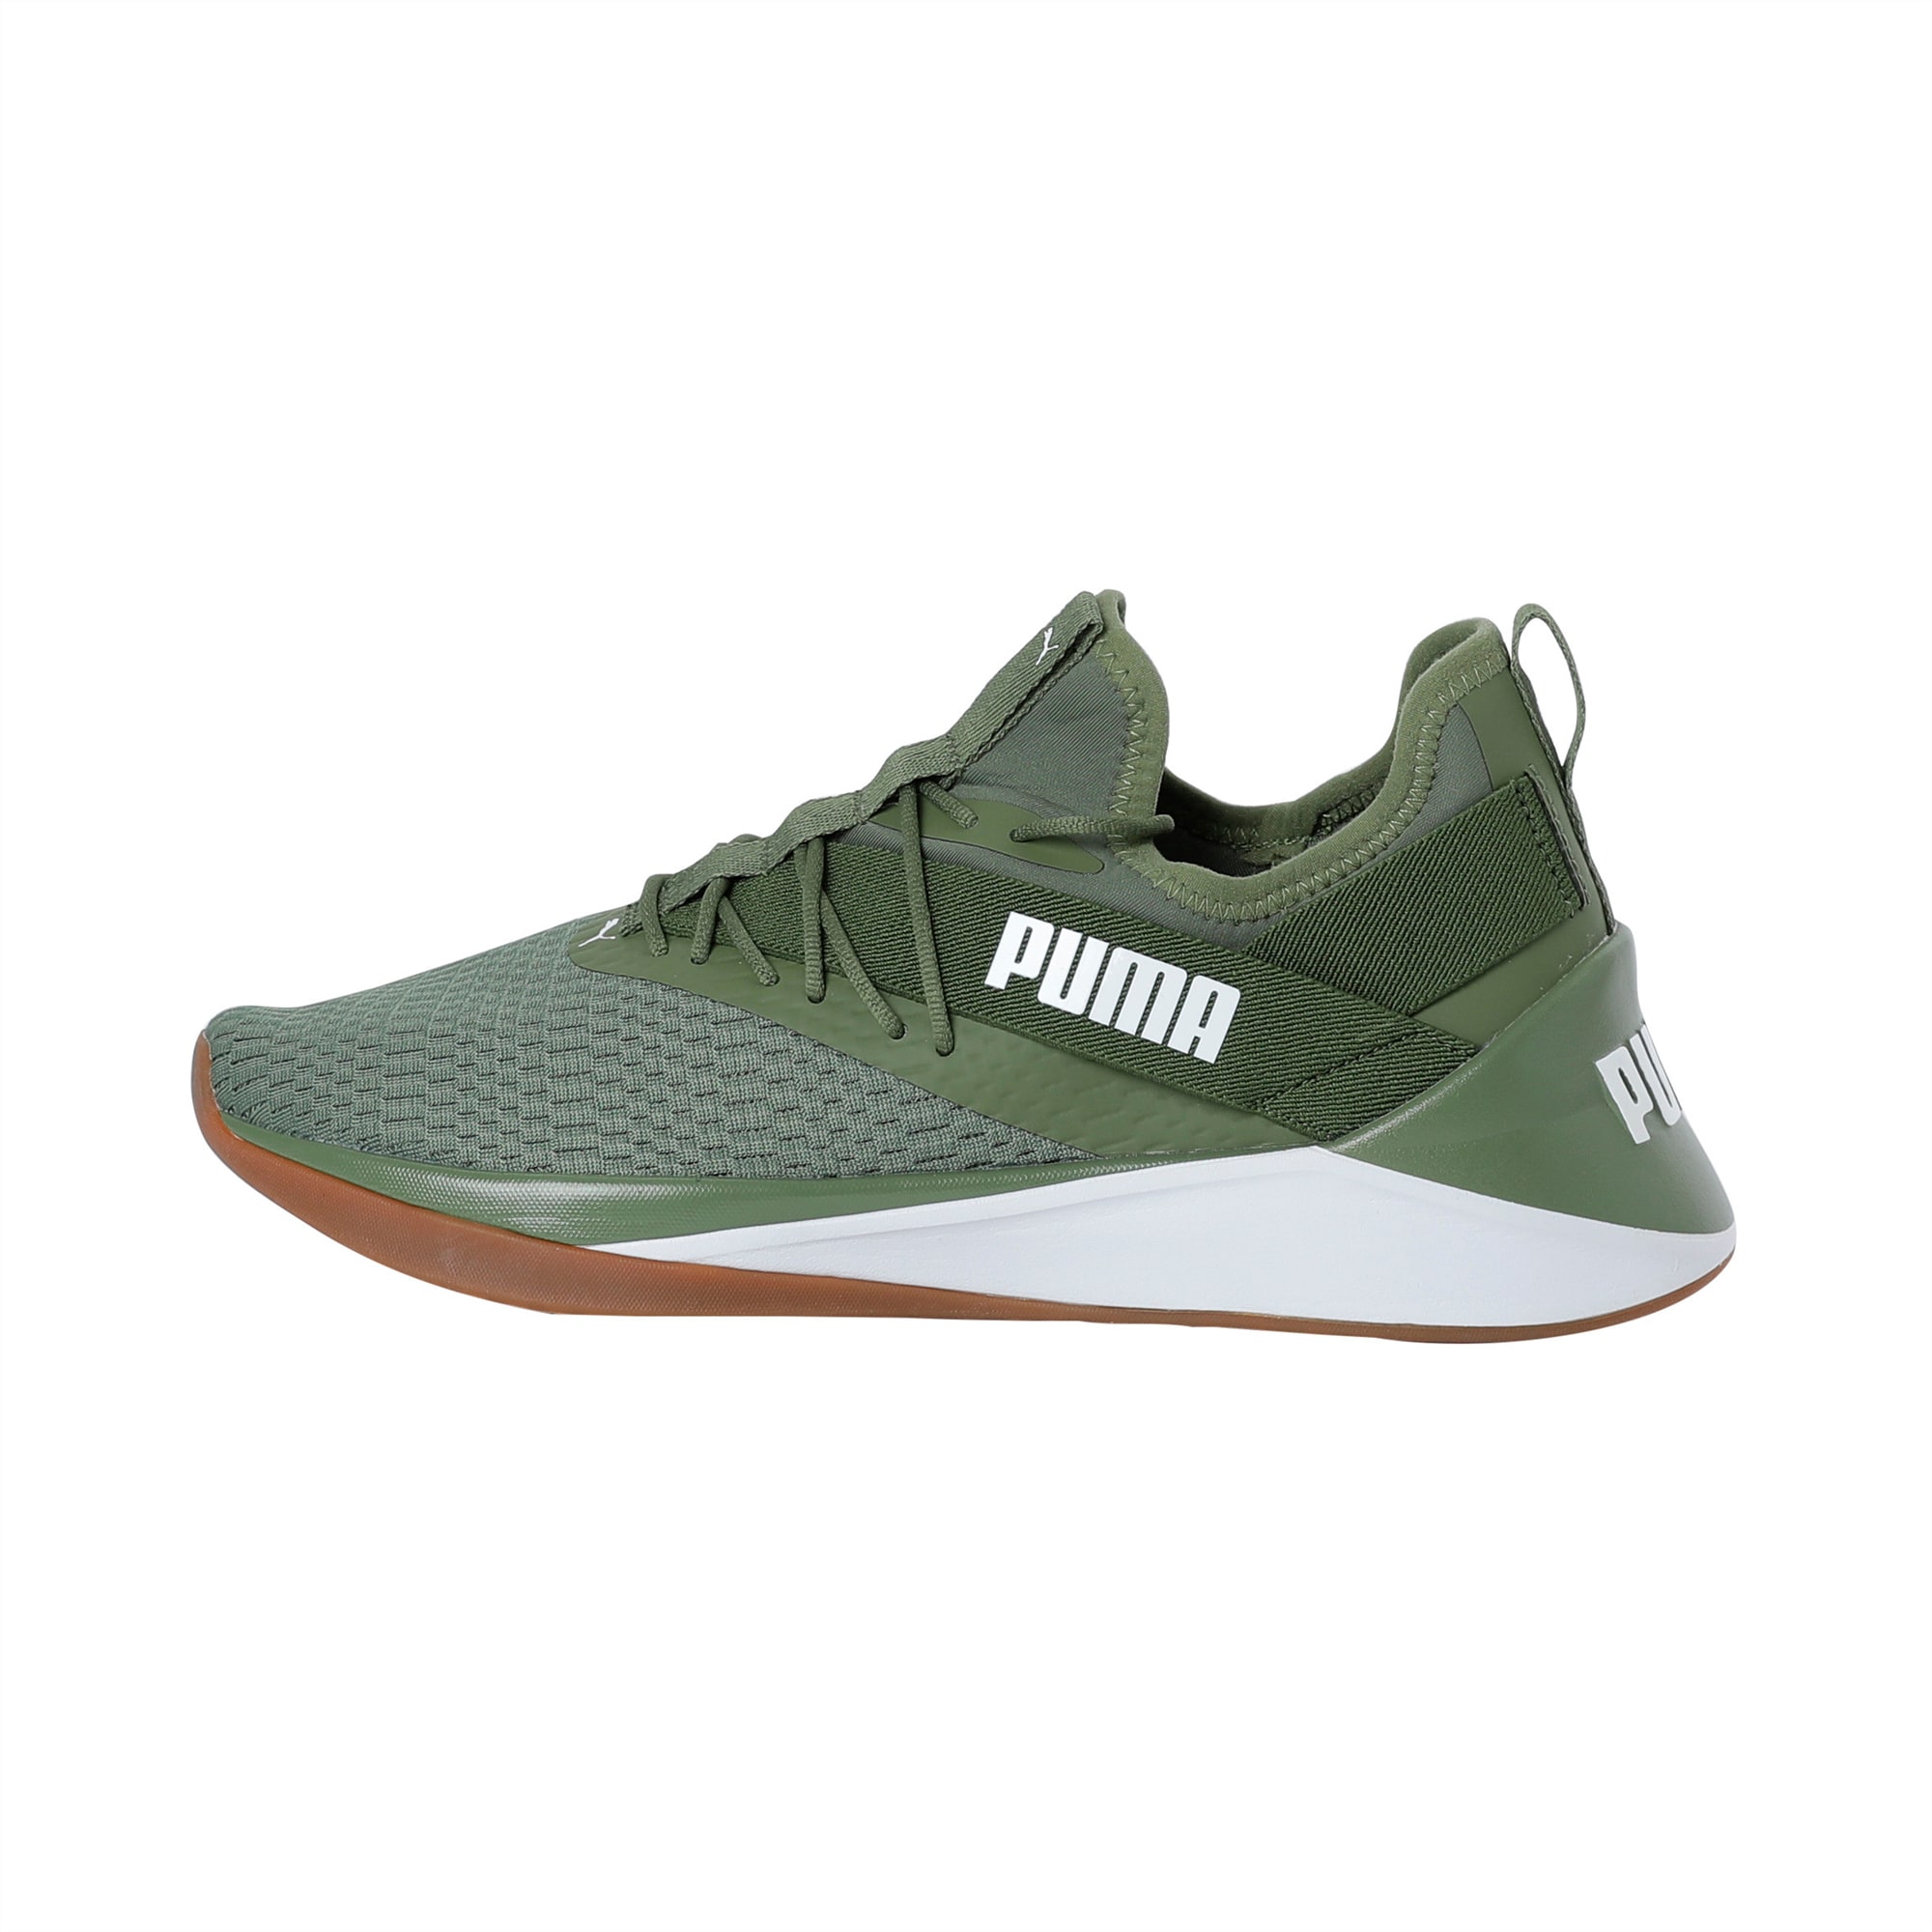 puma summer shoes